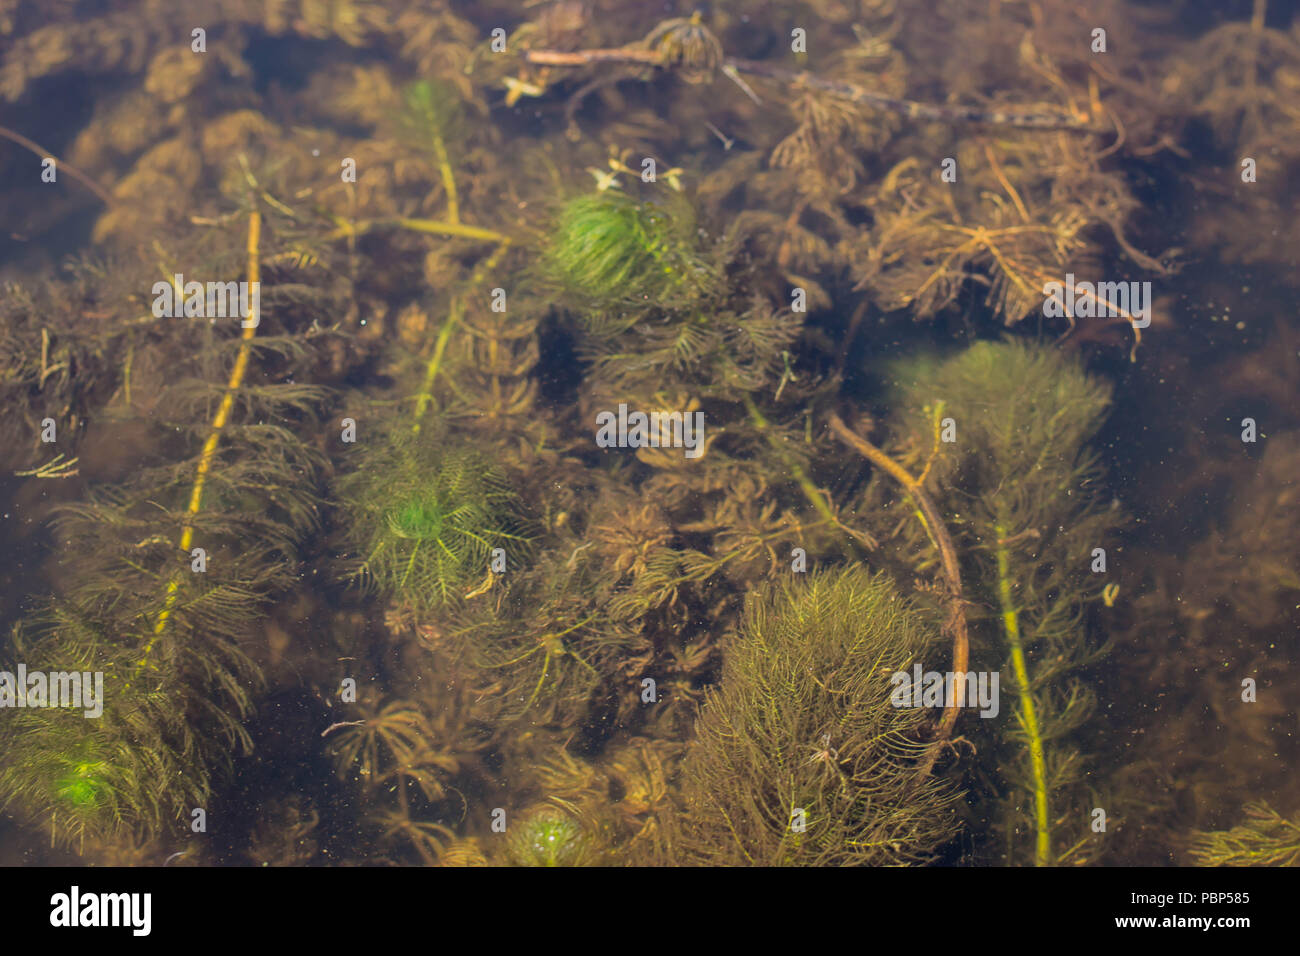 Myriophyllum verticillatum - whorl-leaf watermilfoil in the water Stock Photo